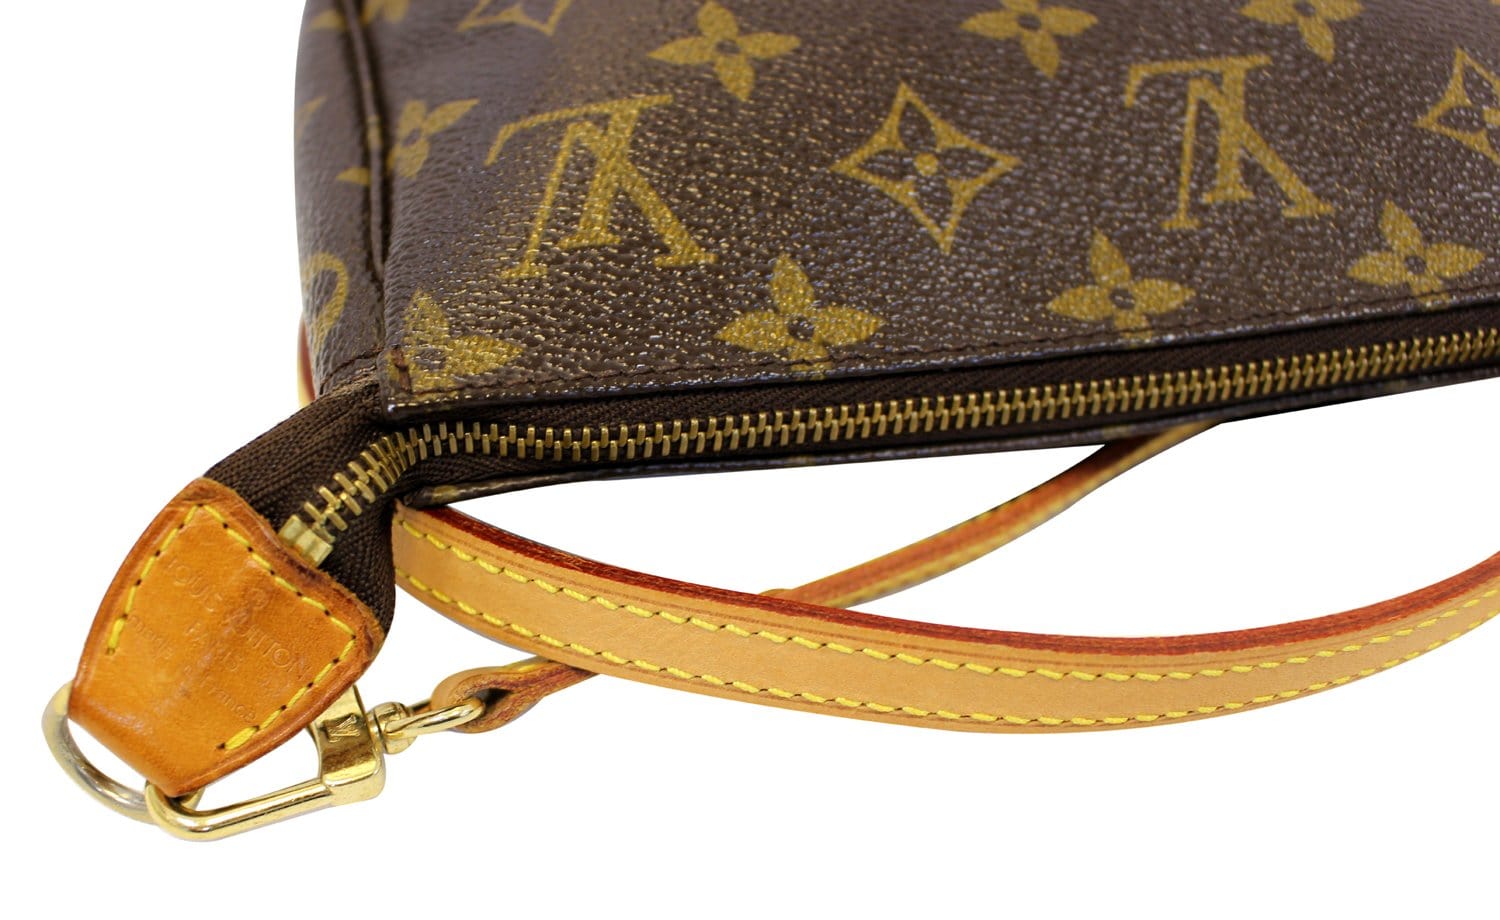 Louis Vuitton Pochette Accessoires in Monogram with Long Adjustable  Calfskin Vachette Strap - SOLD